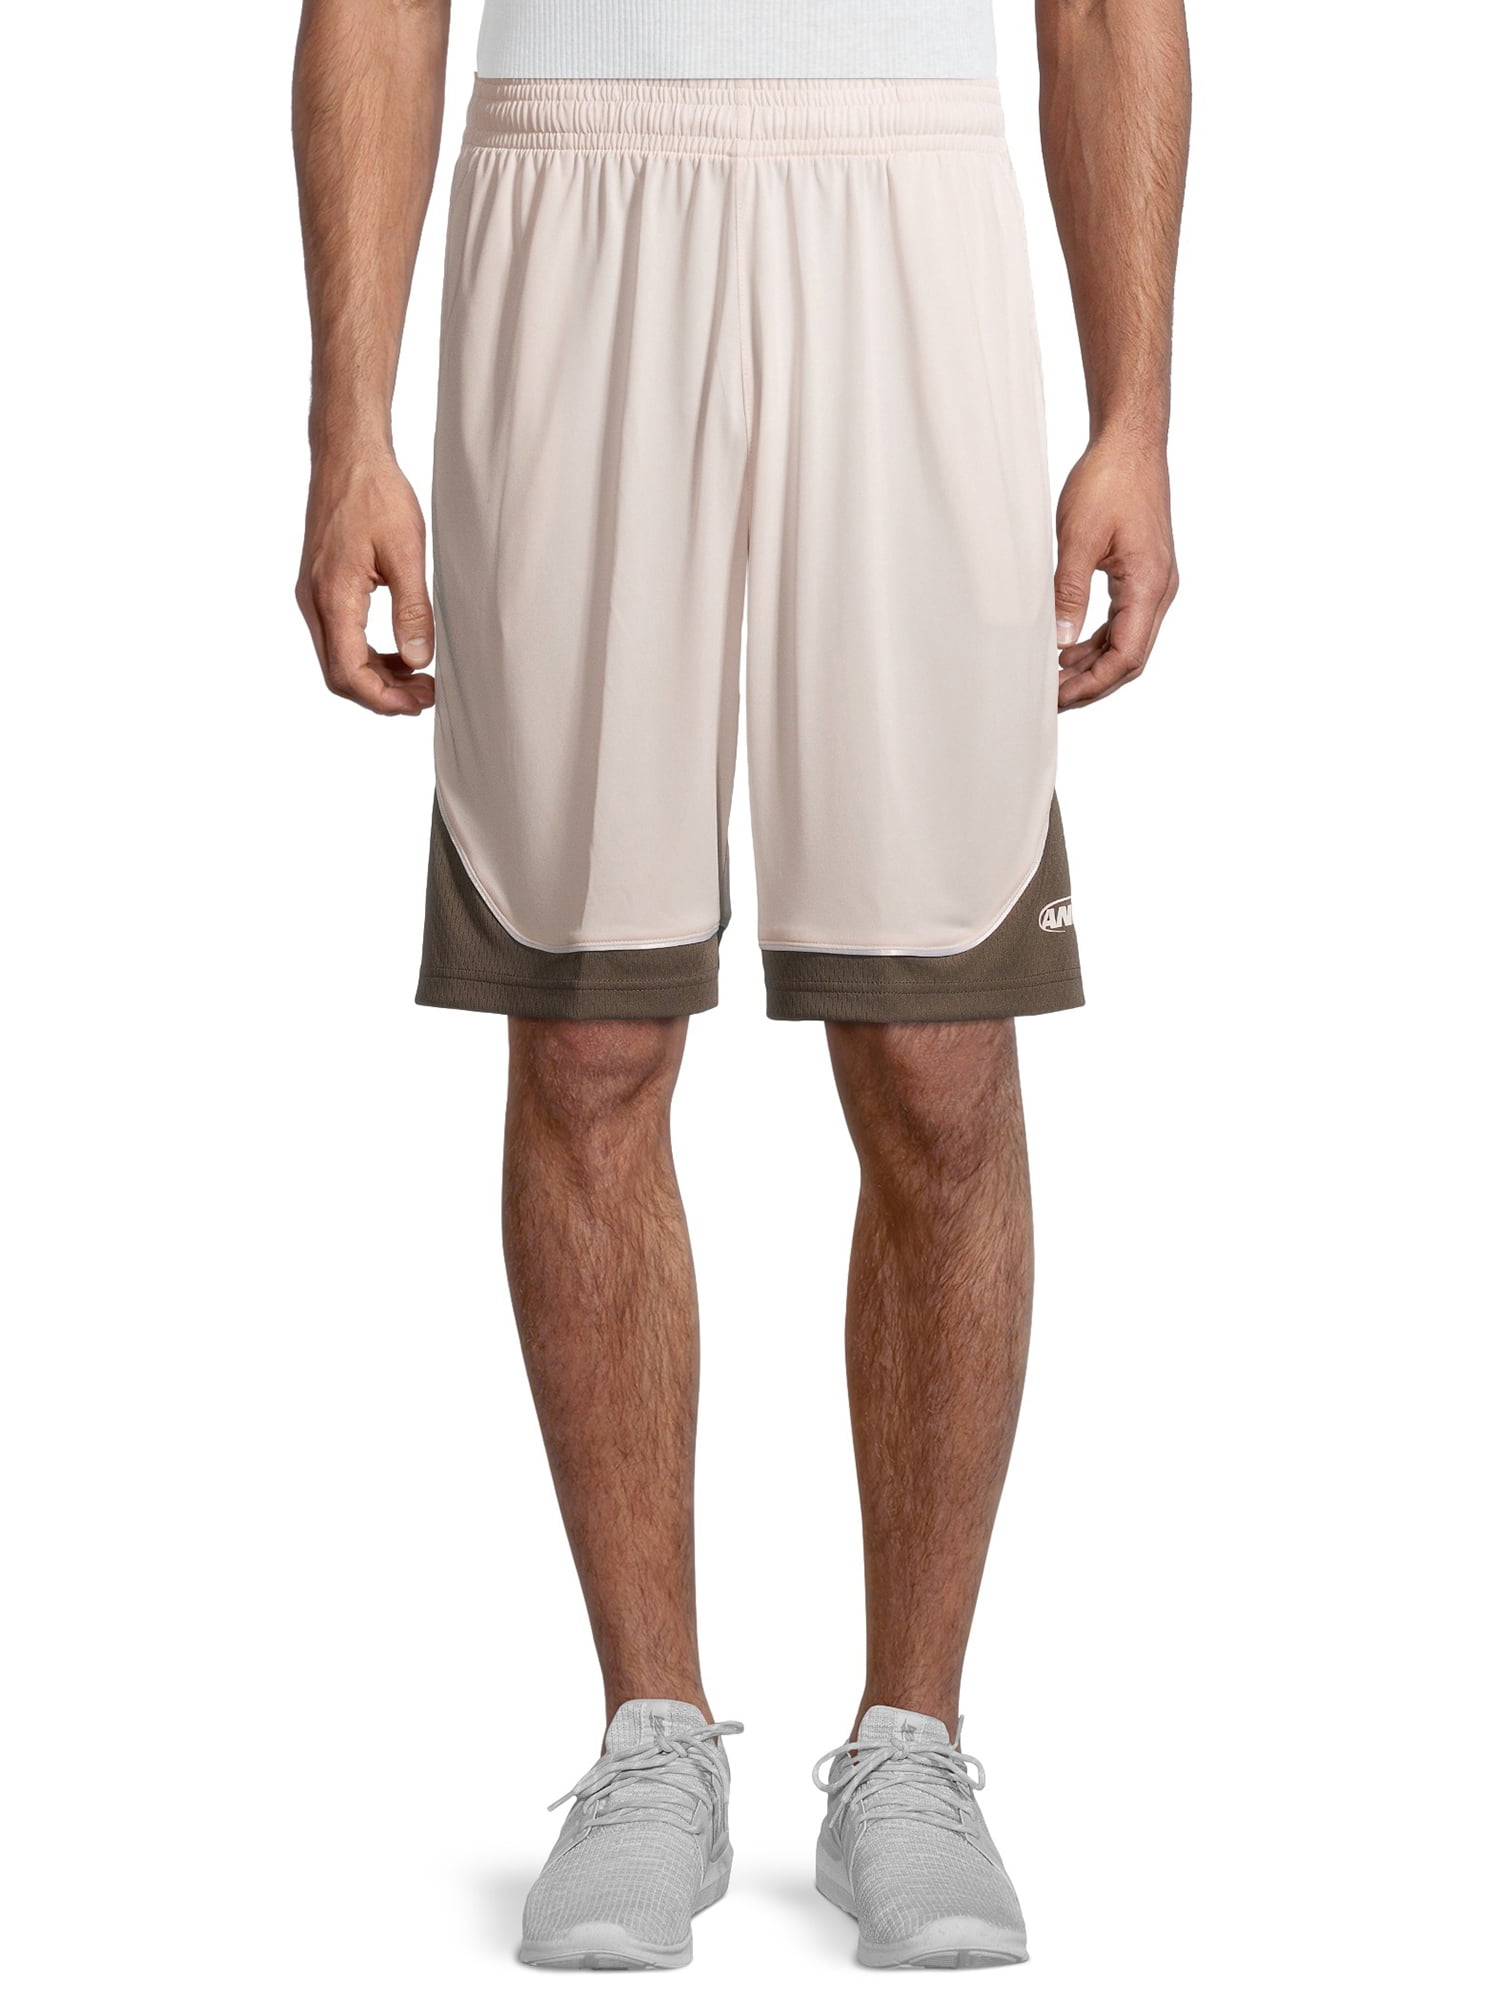 mens basketball shorts in bulkhead